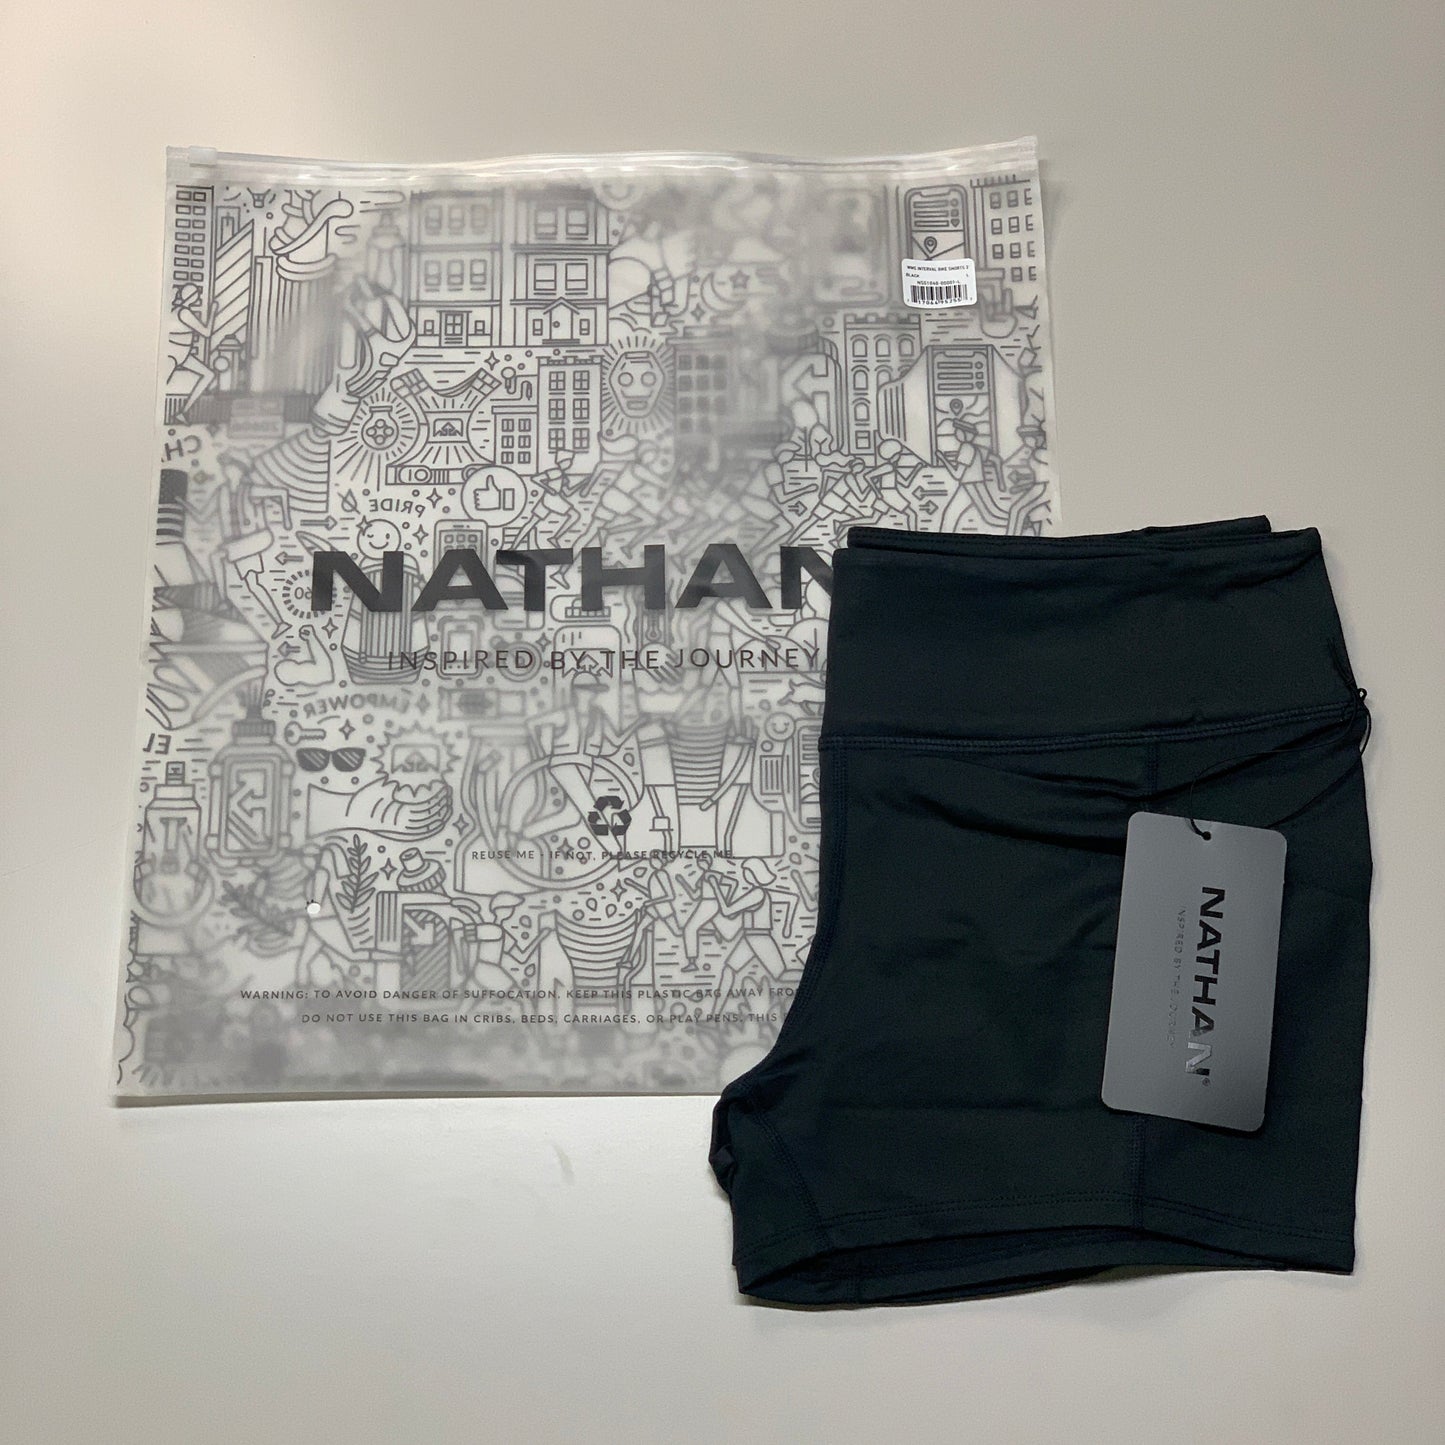 NATHAN Interval 3" Inseam Bike Short Women's Black Size XL NS51040-00001-XL